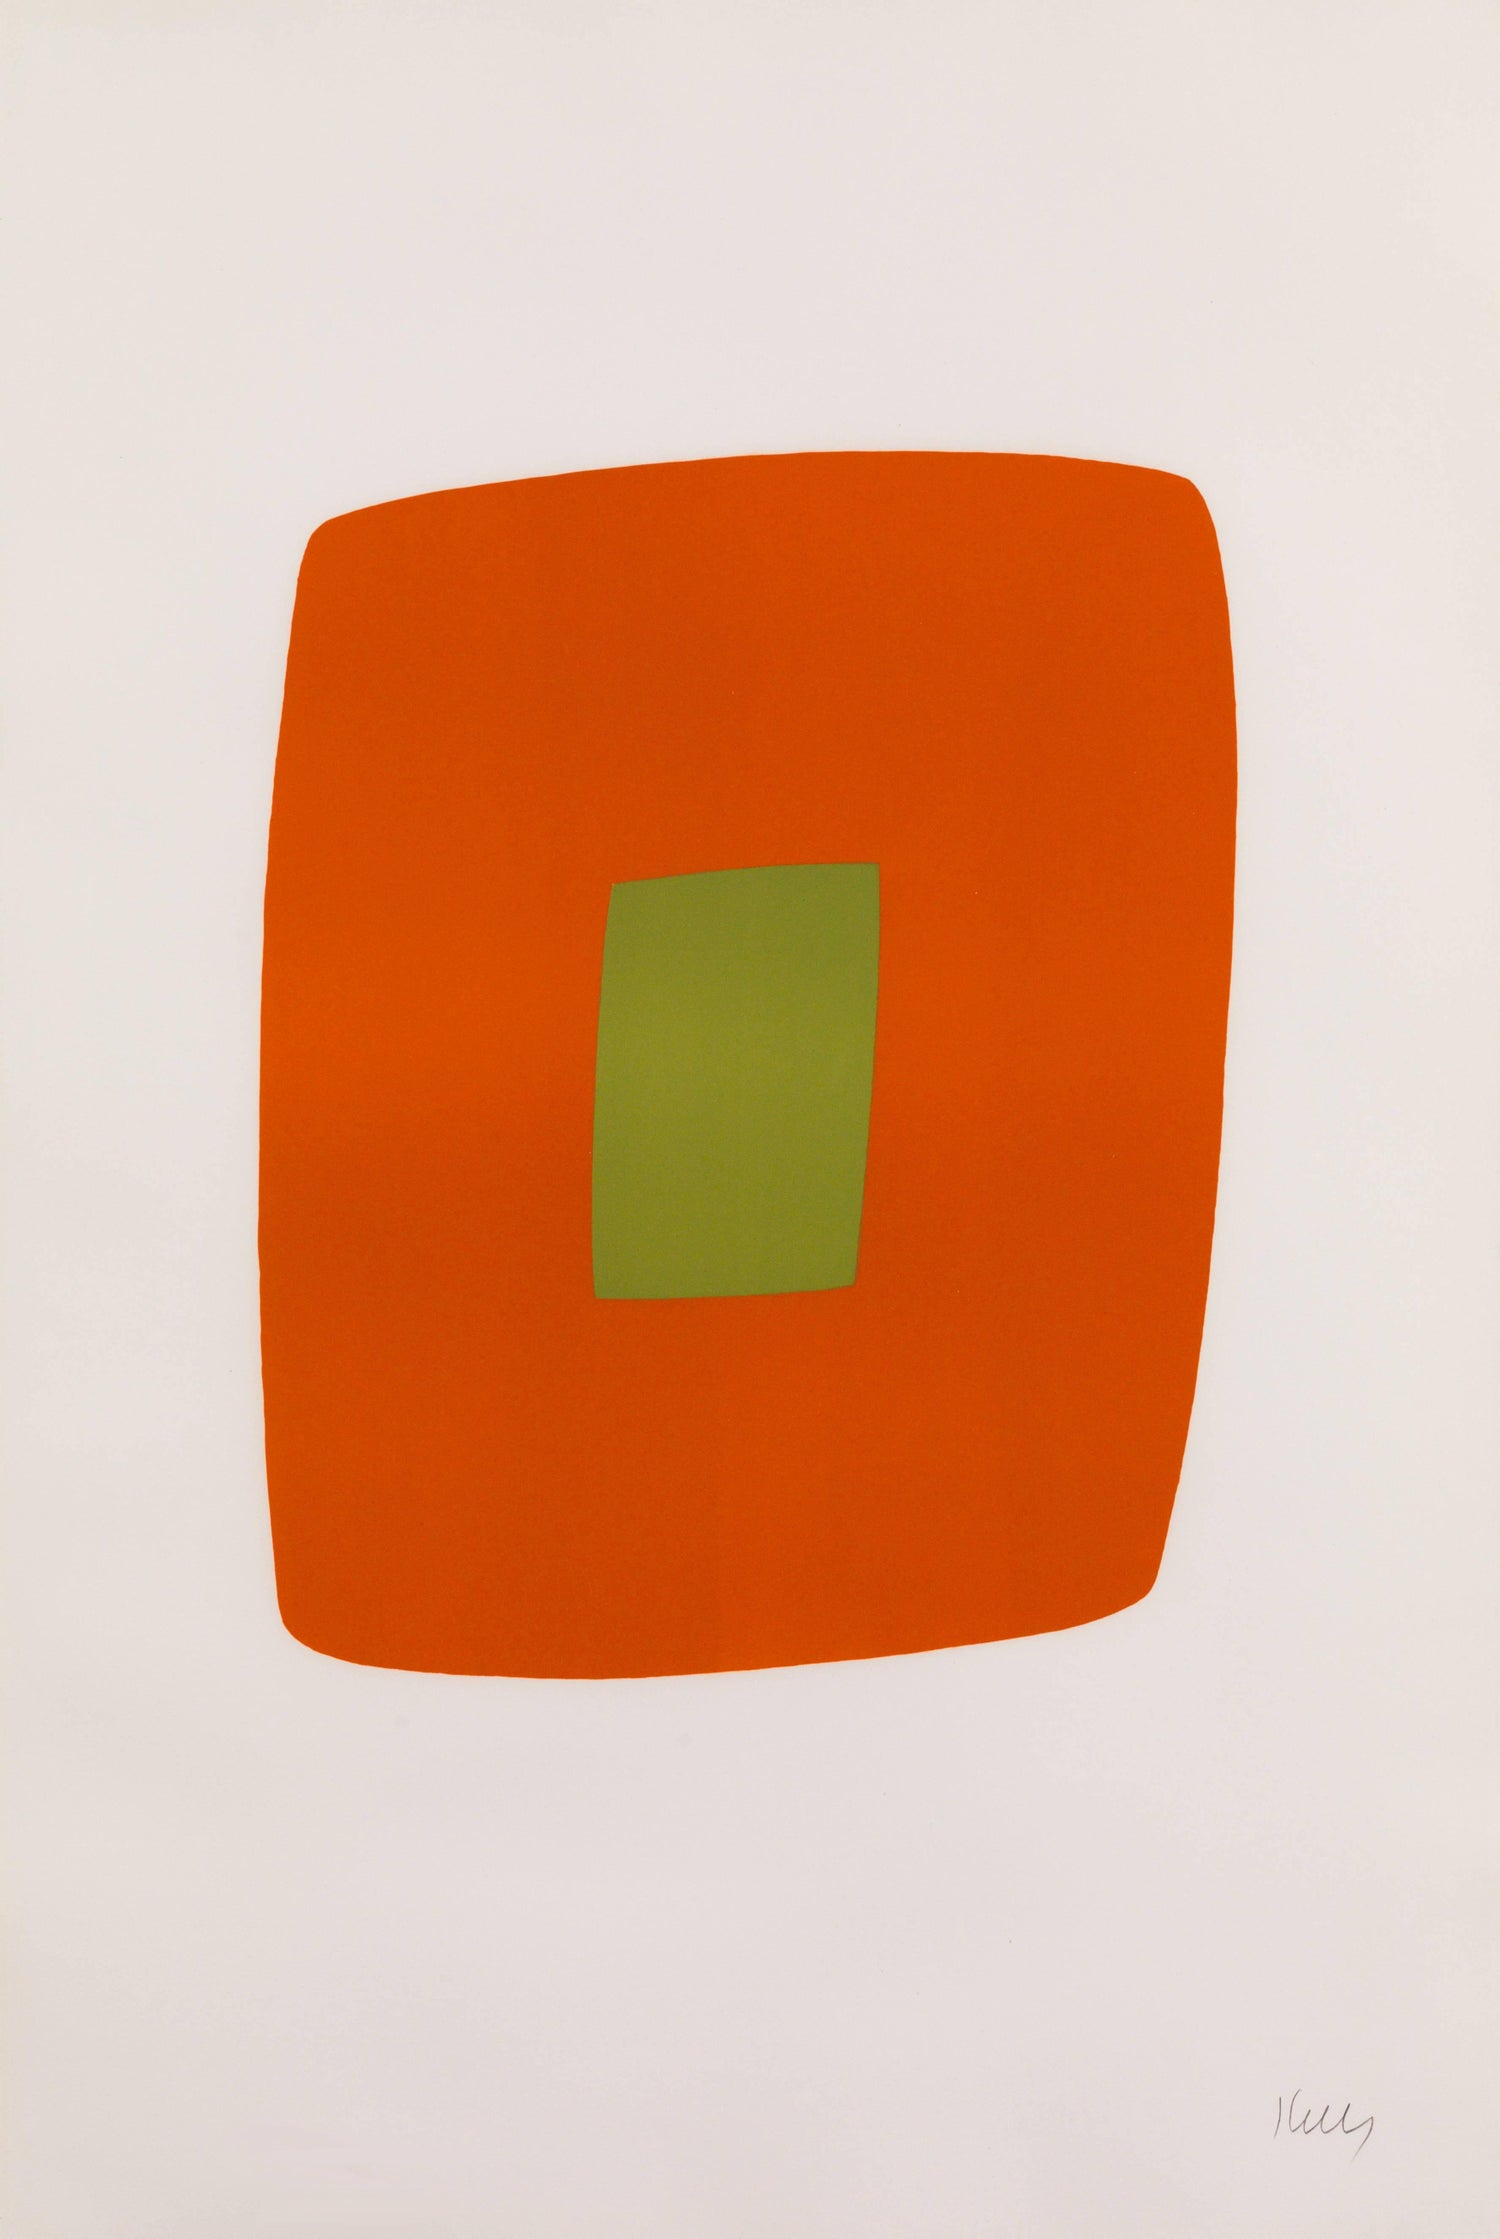 Red ELLSWORTH KELLY Orange et Vert 26" x 20" Lithograph 1964 Minimalism Green